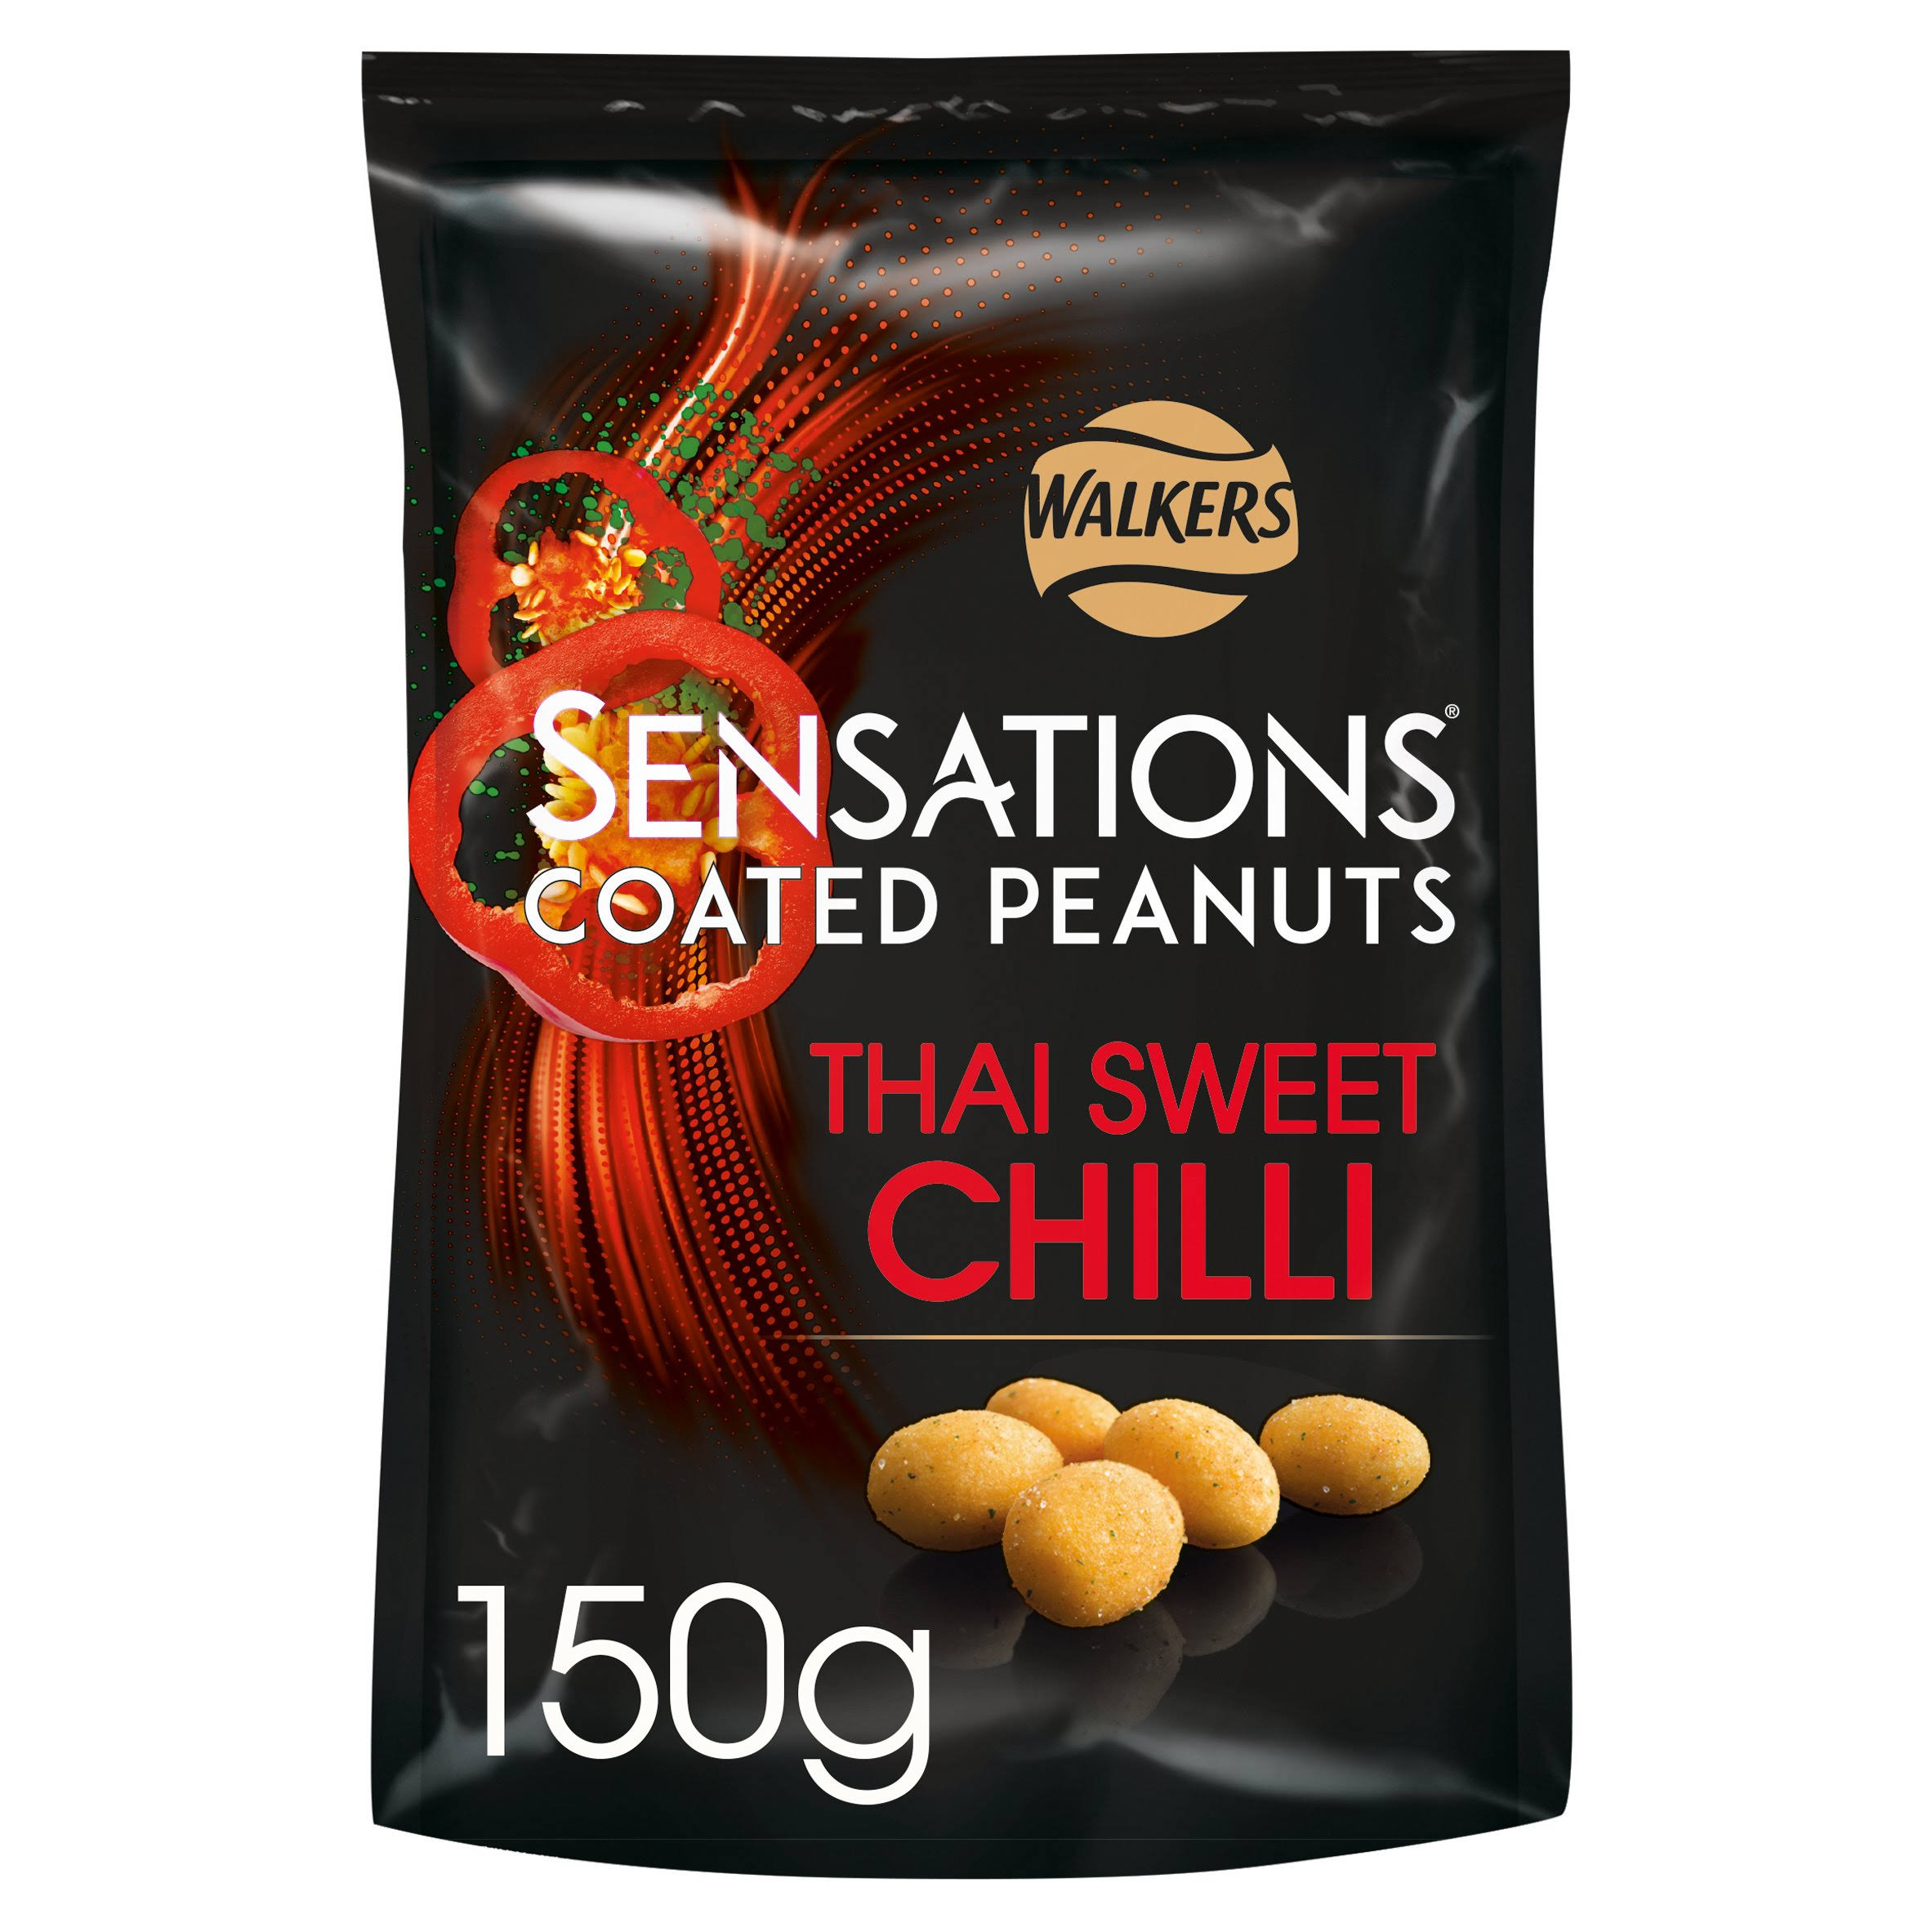 Walkers Sensations Sensations Coated Peanuts - 150g, Thai Sweet Chilli